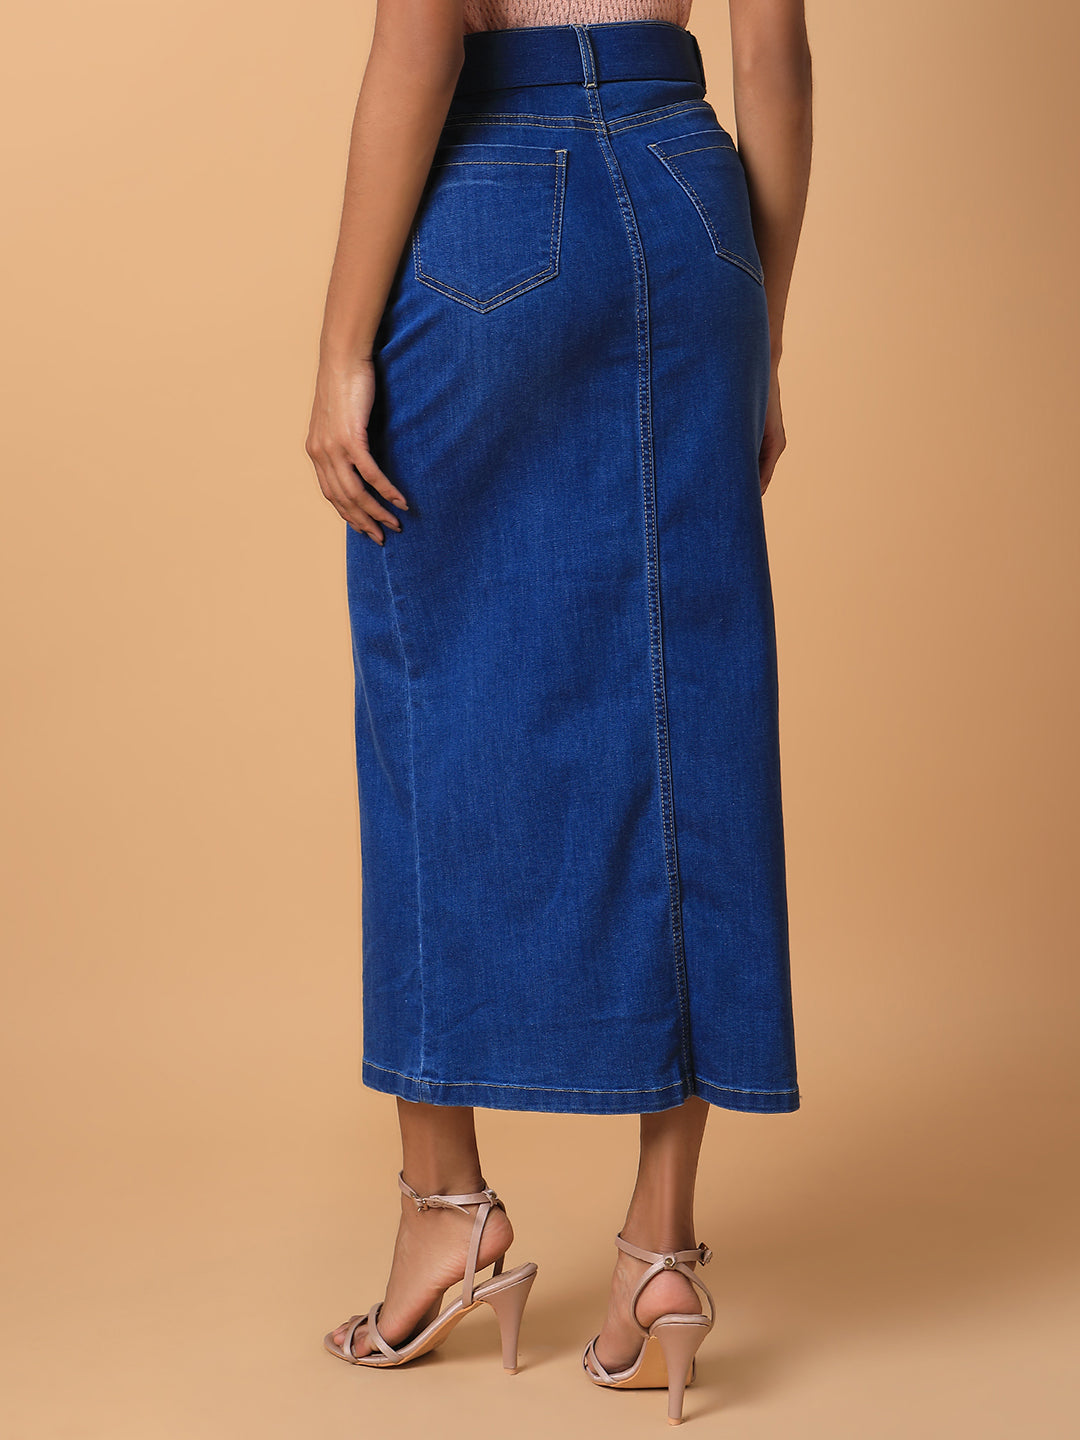 Women Solid Blue Straight Maxi Denim Skirt with Belt